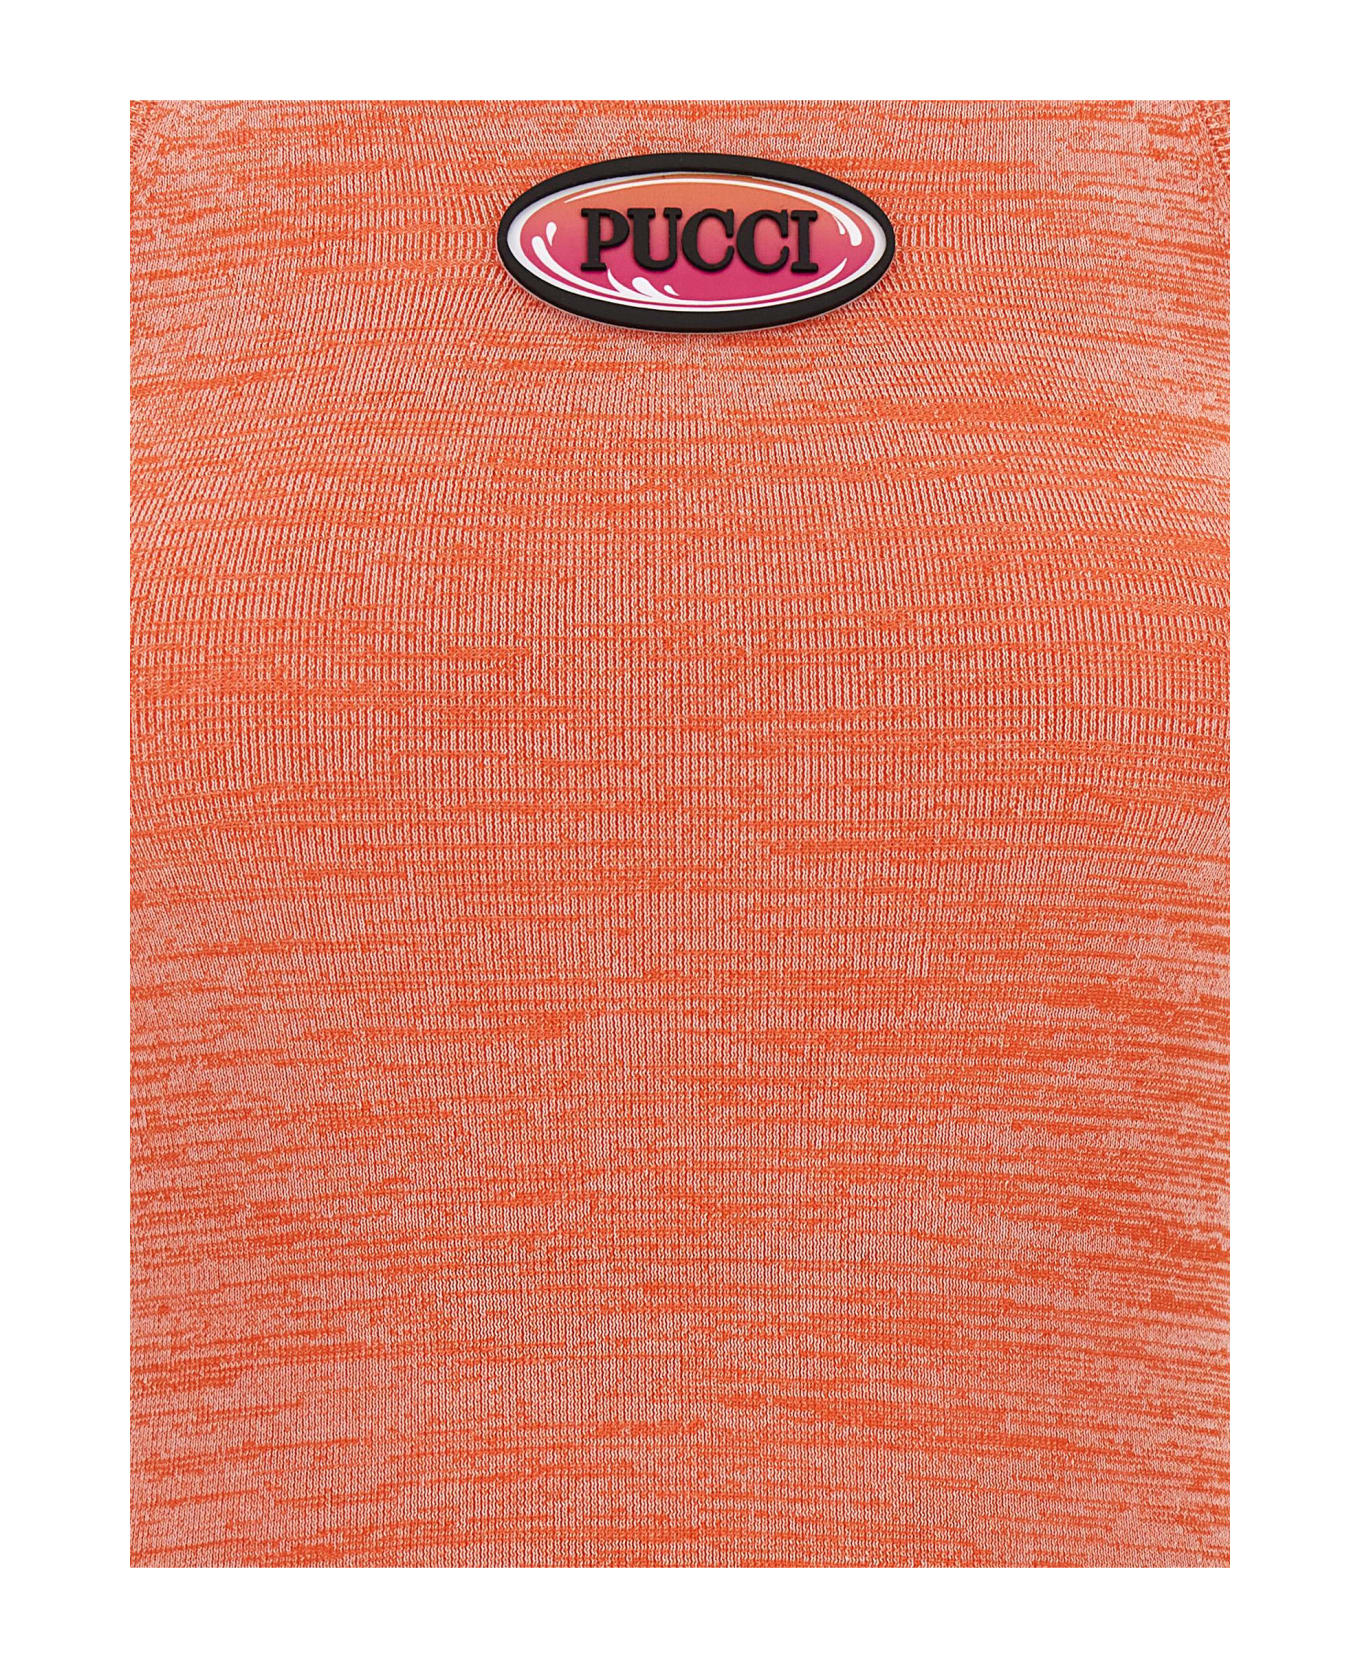 Pucci Logo Top - Pink